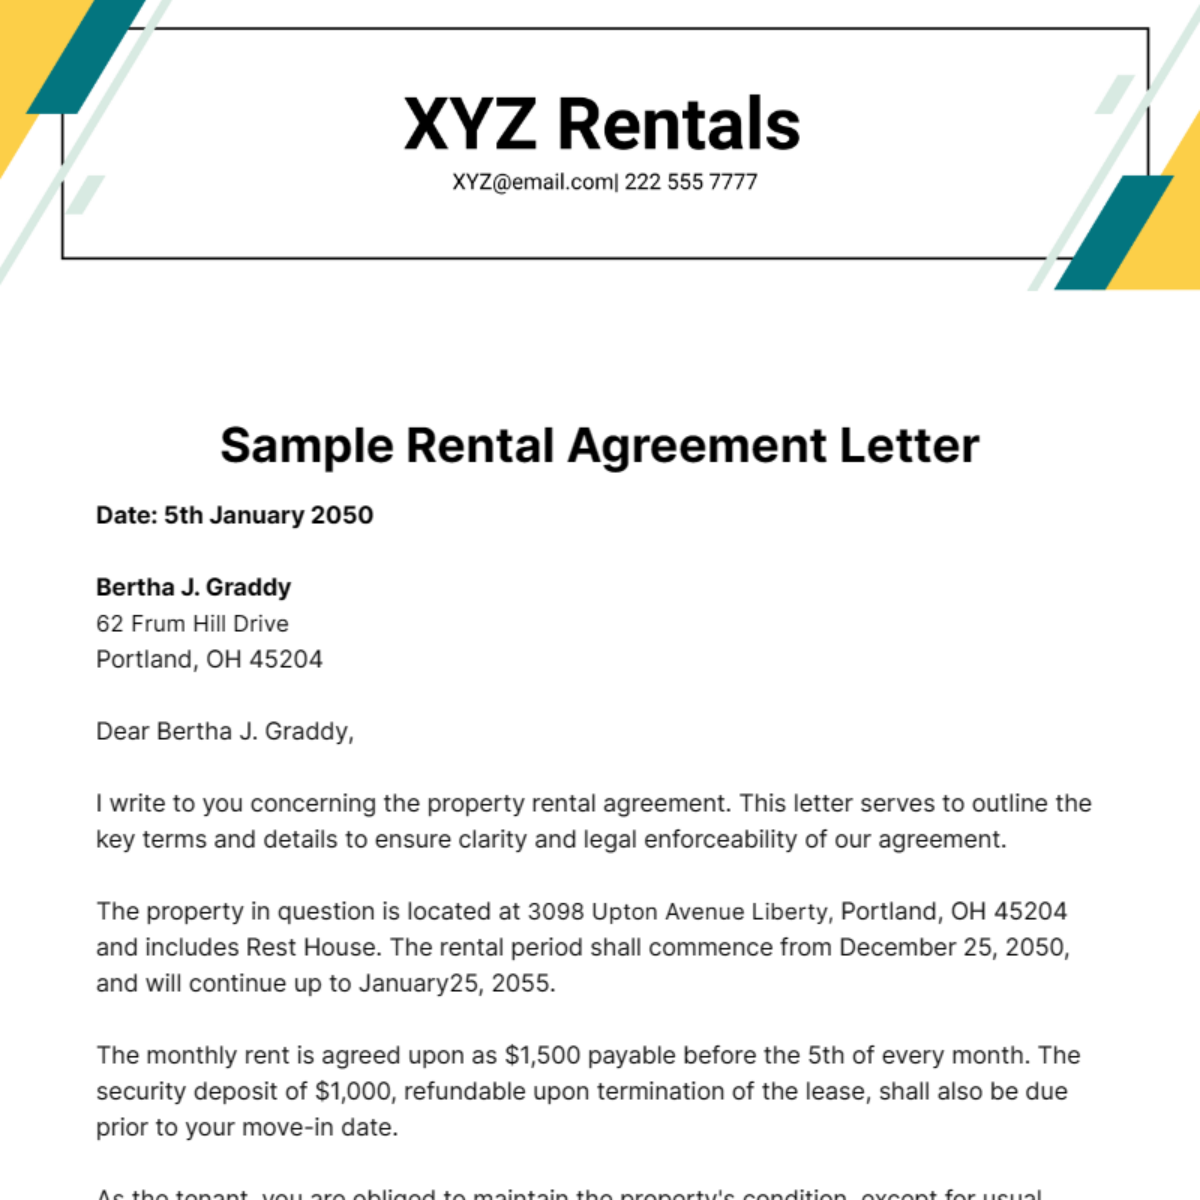 Sample Rental Agreement Letter  Template